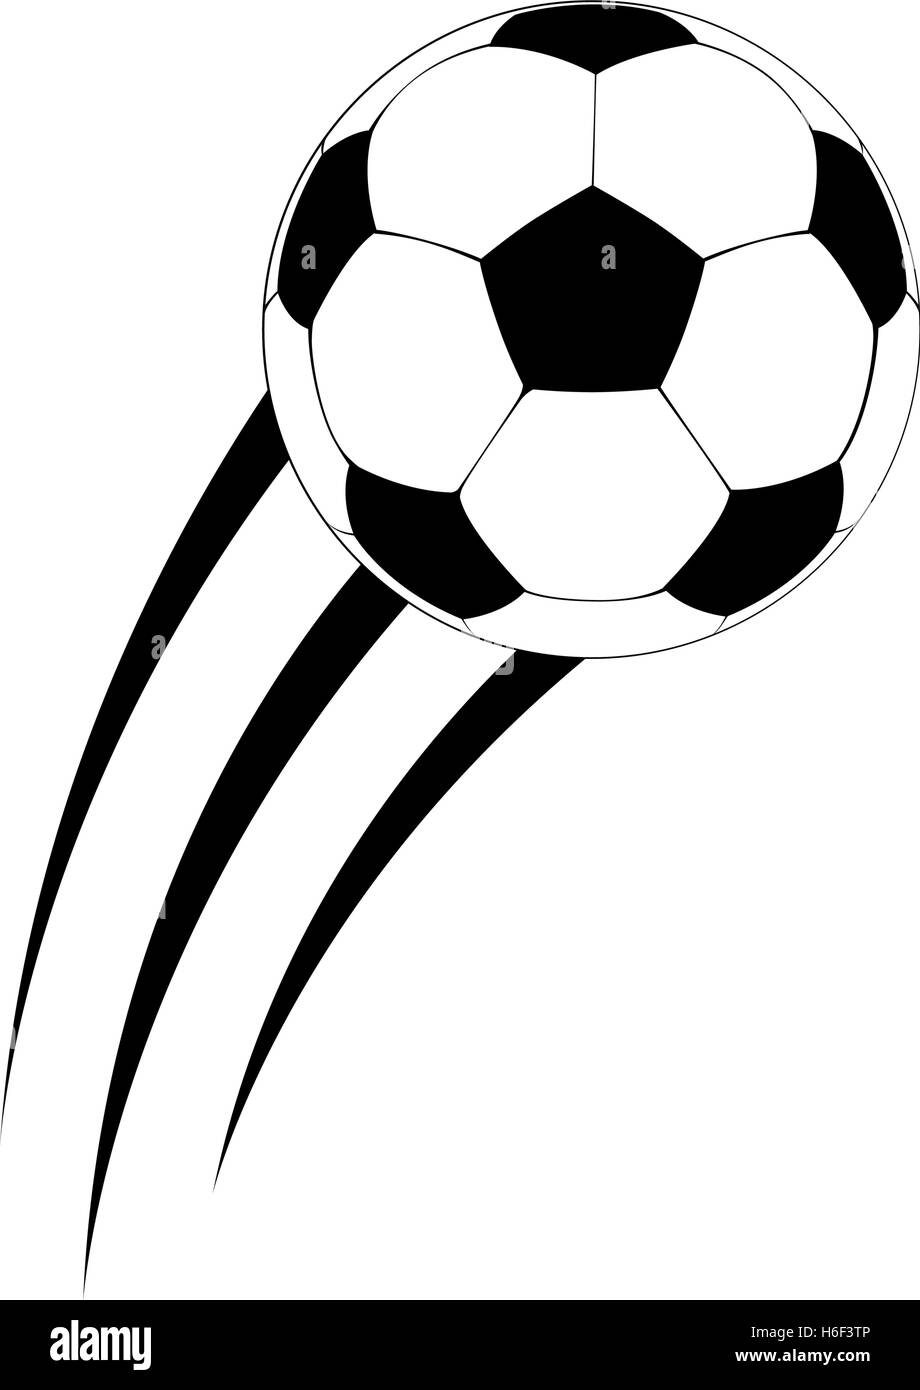 Football ballon vecteur icône isolé illustration design Image Vectorielle  Stock - Alamy